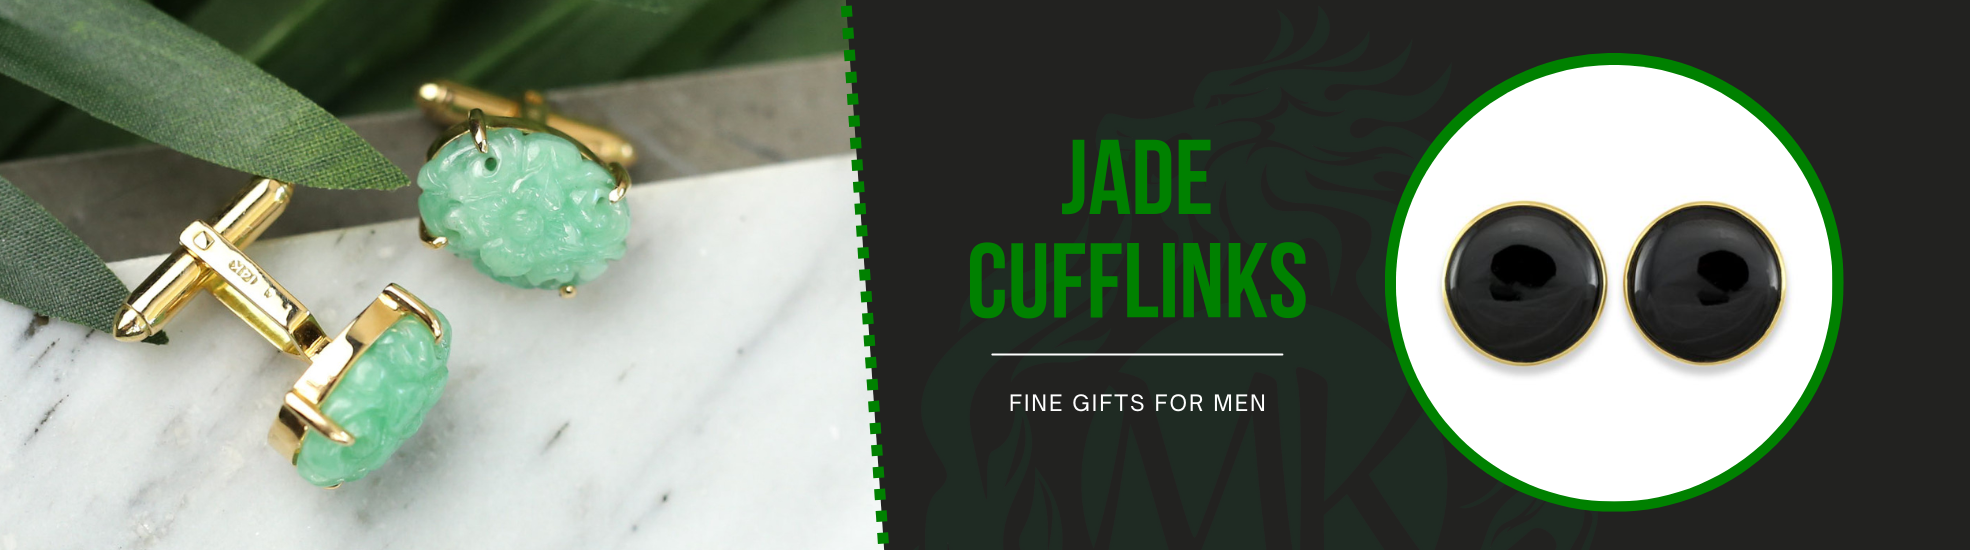 Mason Kay Jade Cufflinks - Natural Jade Cufflinks